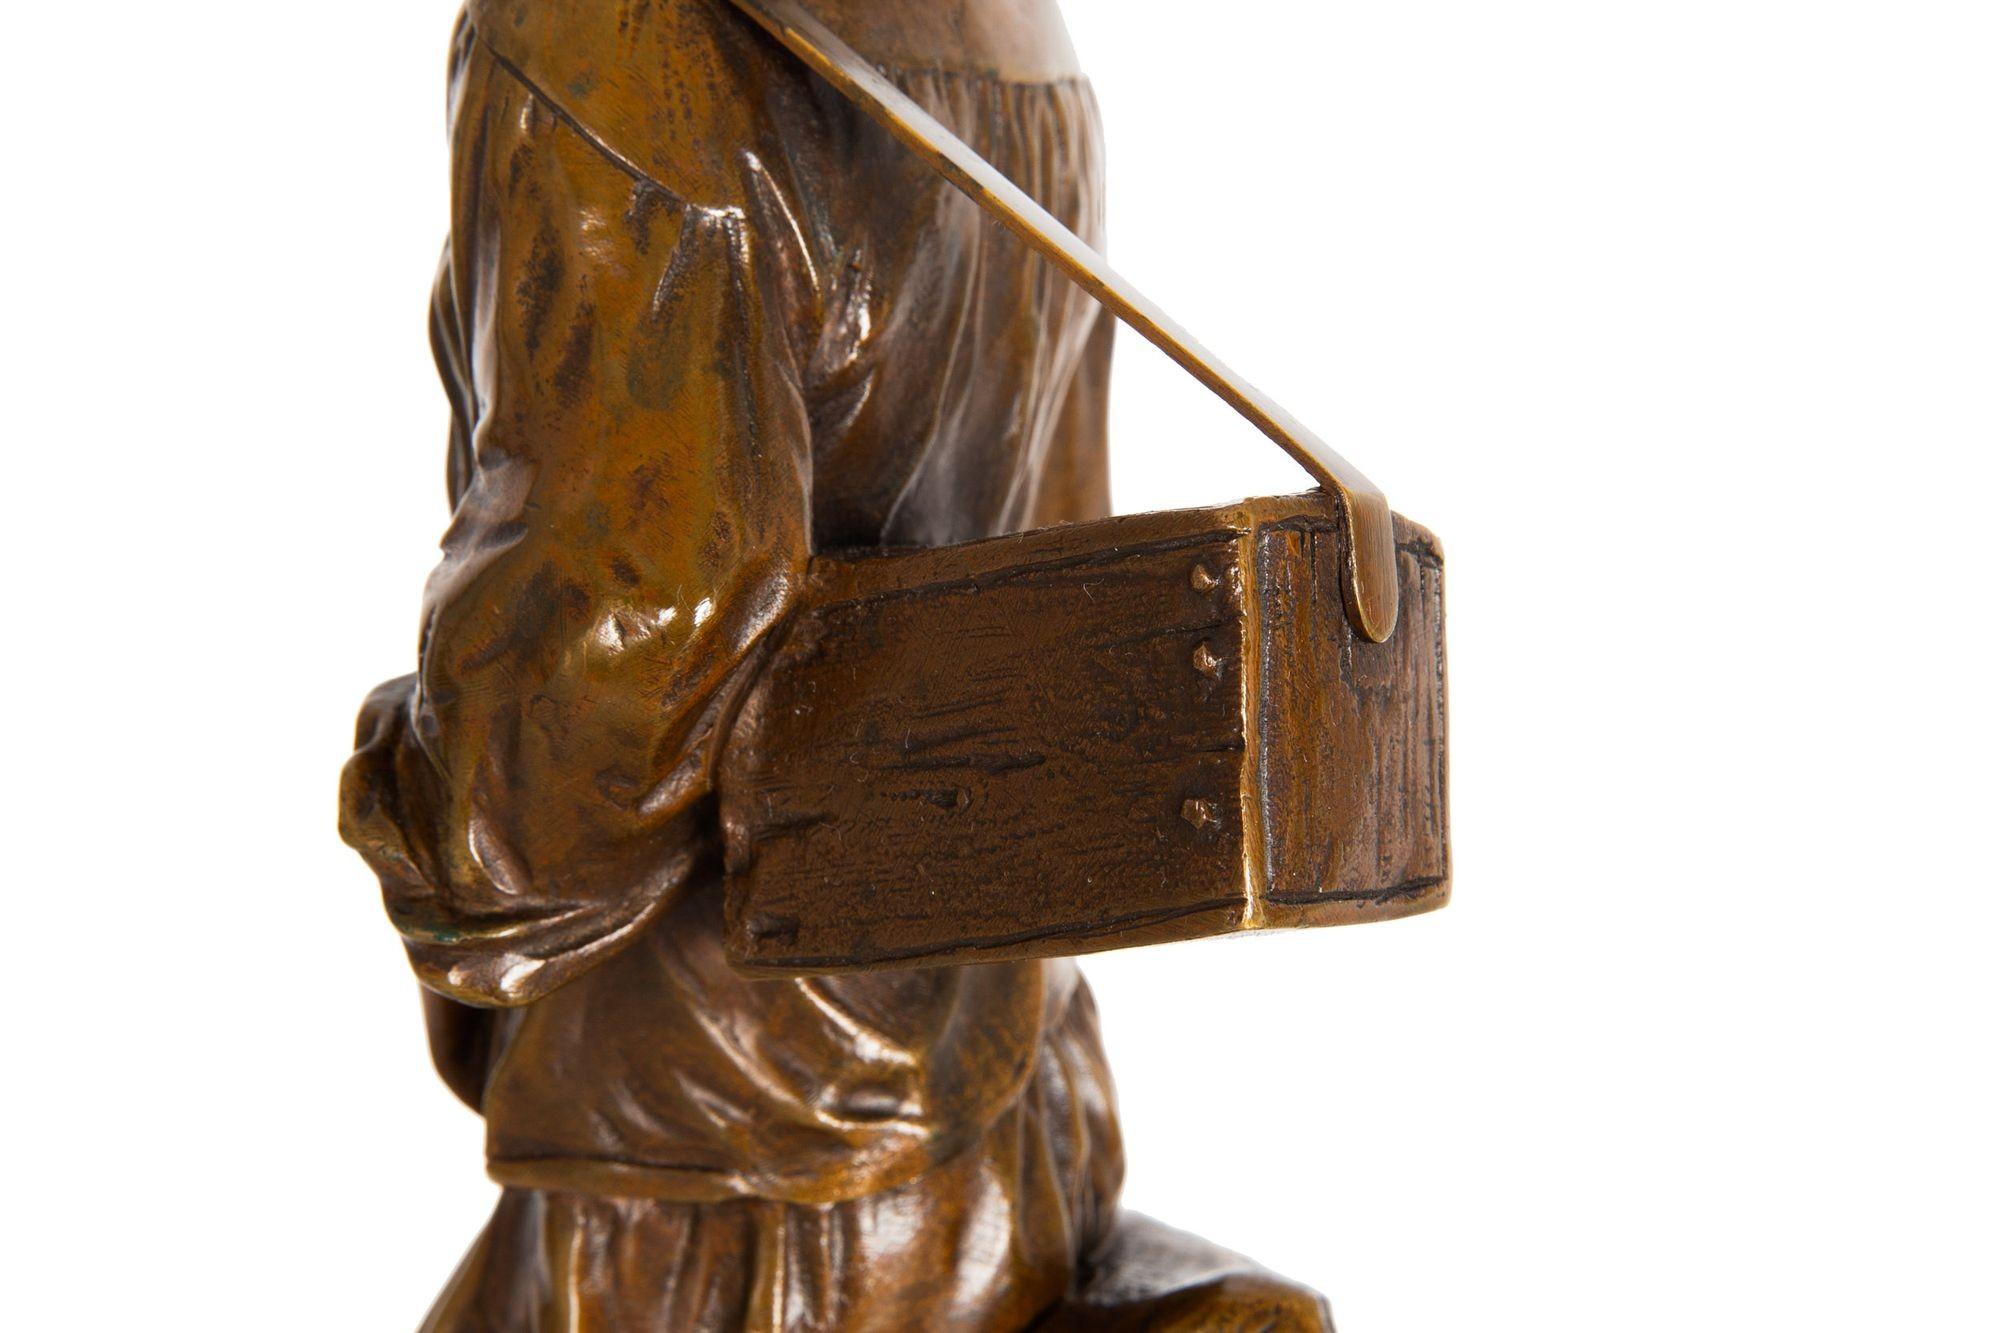 French Orientalist Bronze Sculpture “Arab Shoeshine” after Edouard Drouot For Sale 12